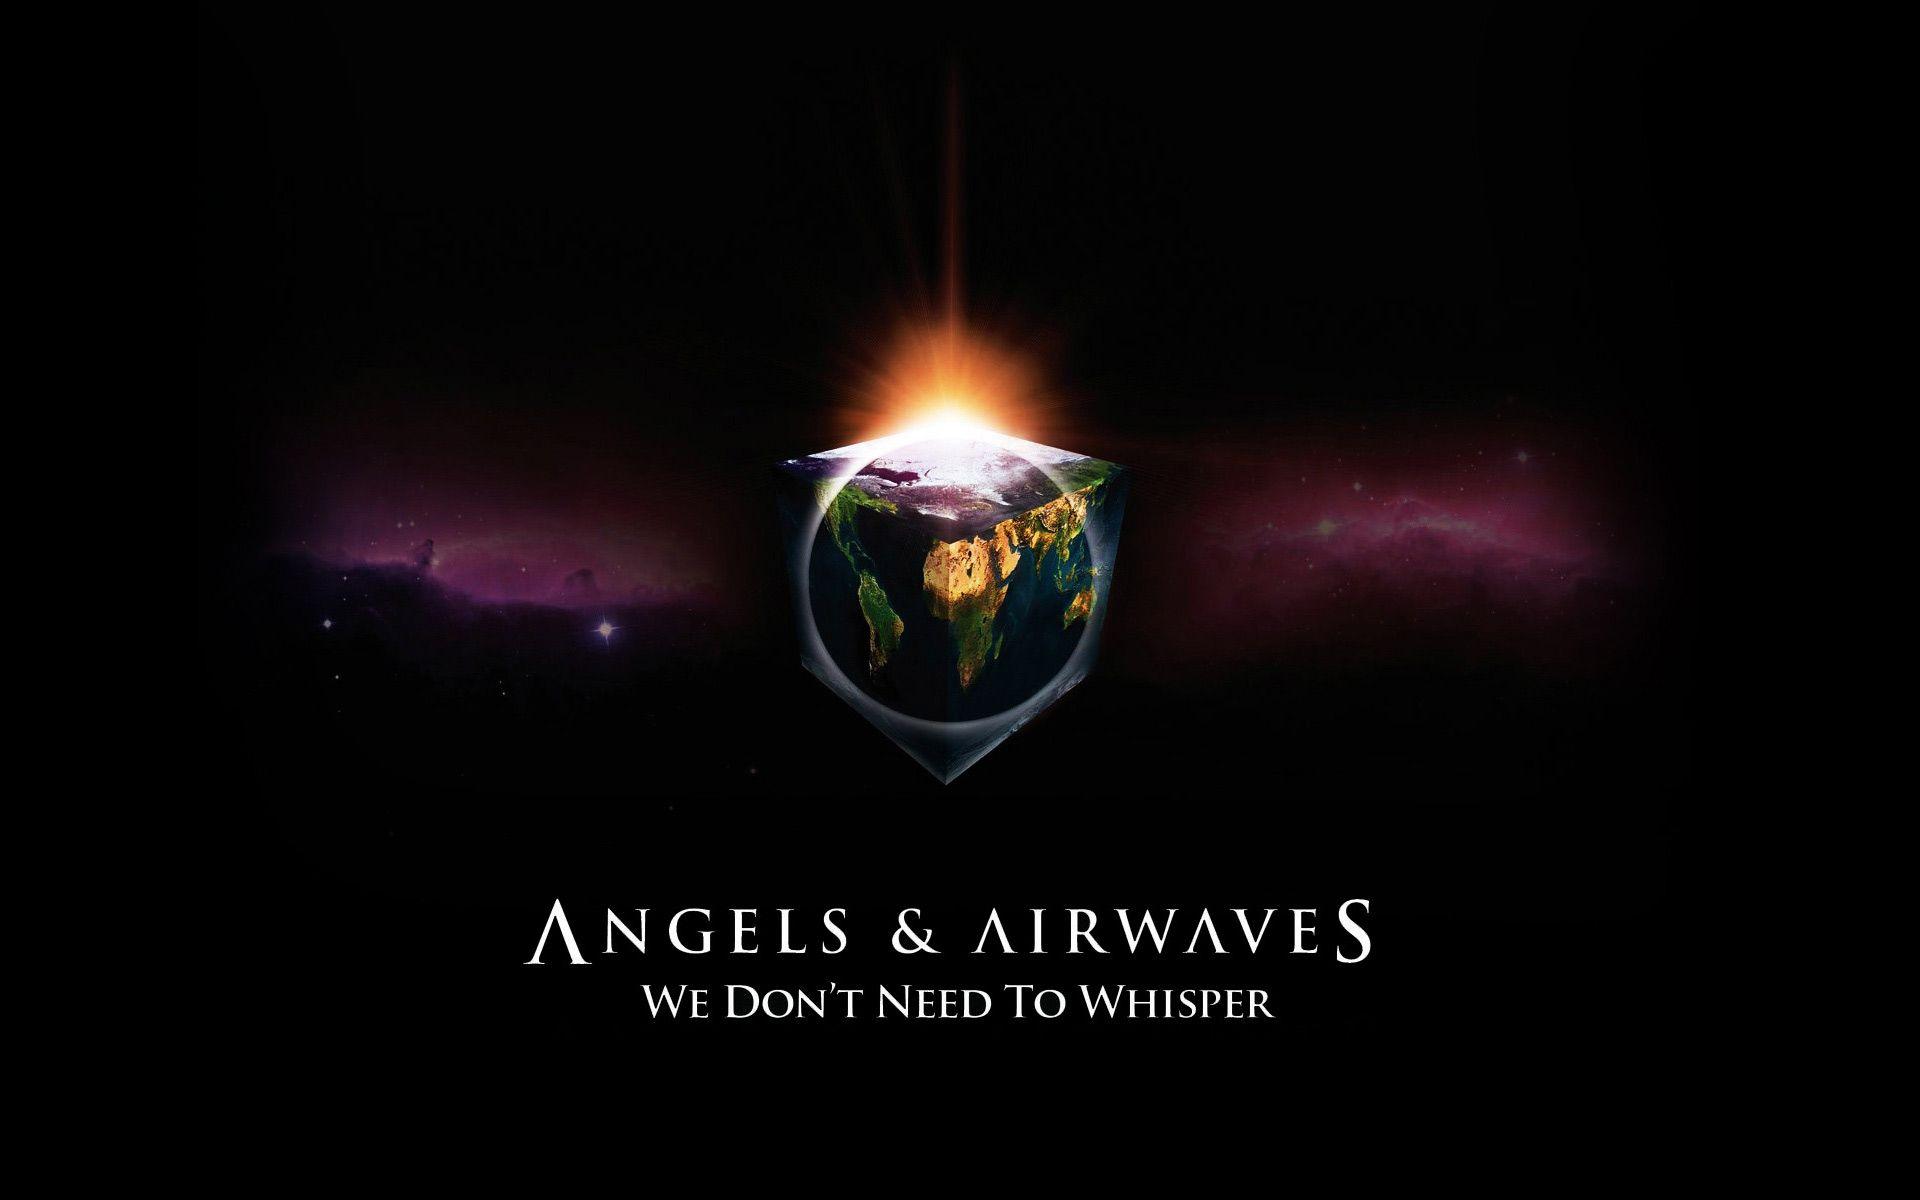 Angels and Airwaves Wallpapers - Top Free Angels and Airwaves